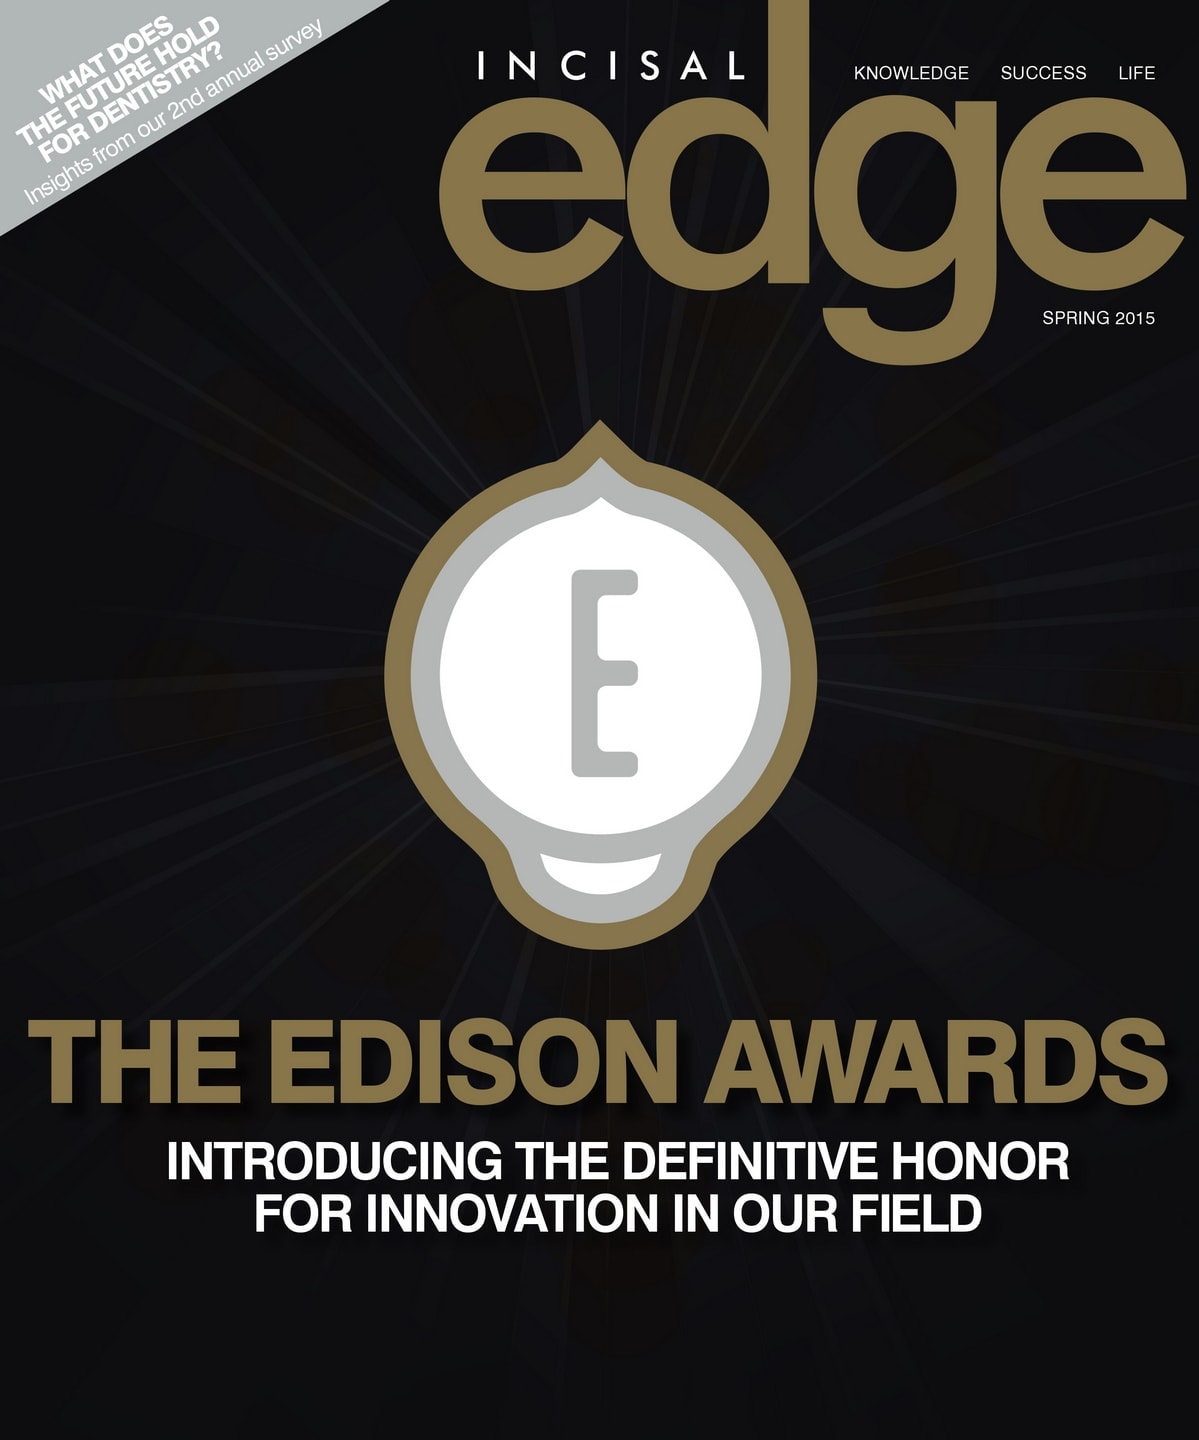 IncisalEdge_Edison2015_Cover